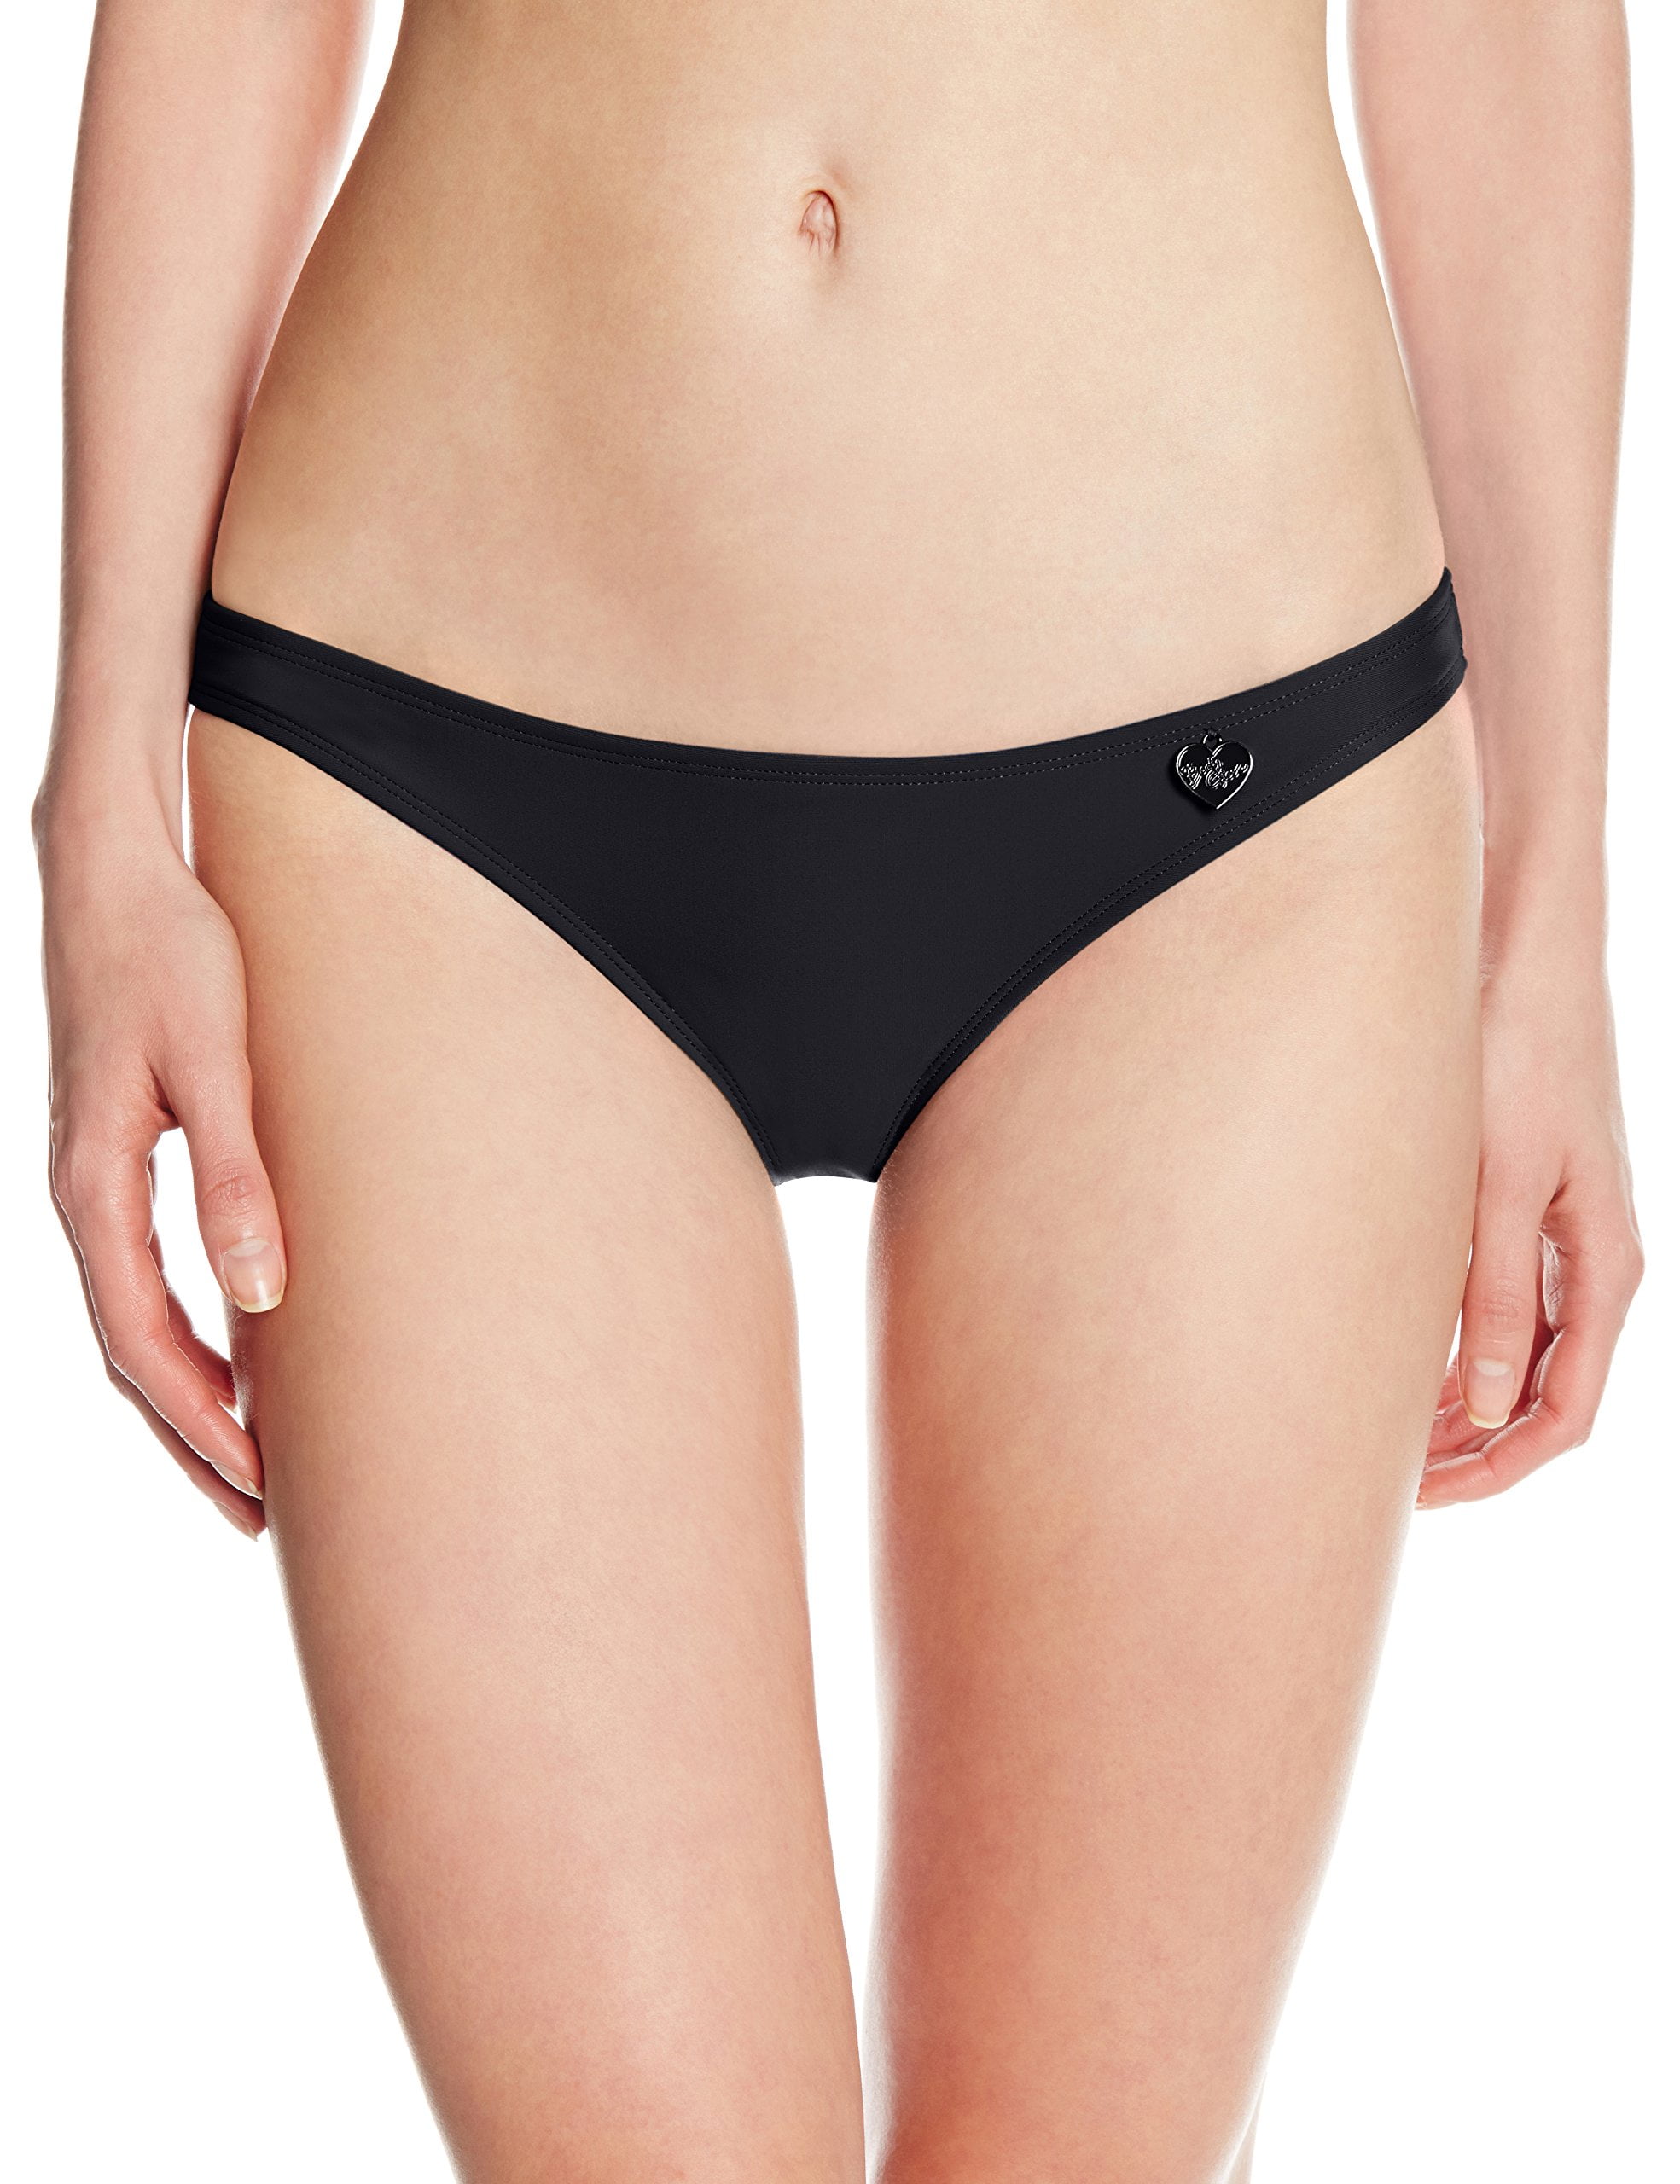 Body Glove Womens Smoothies Basic Full Coverage Bikini Bottom Large Black